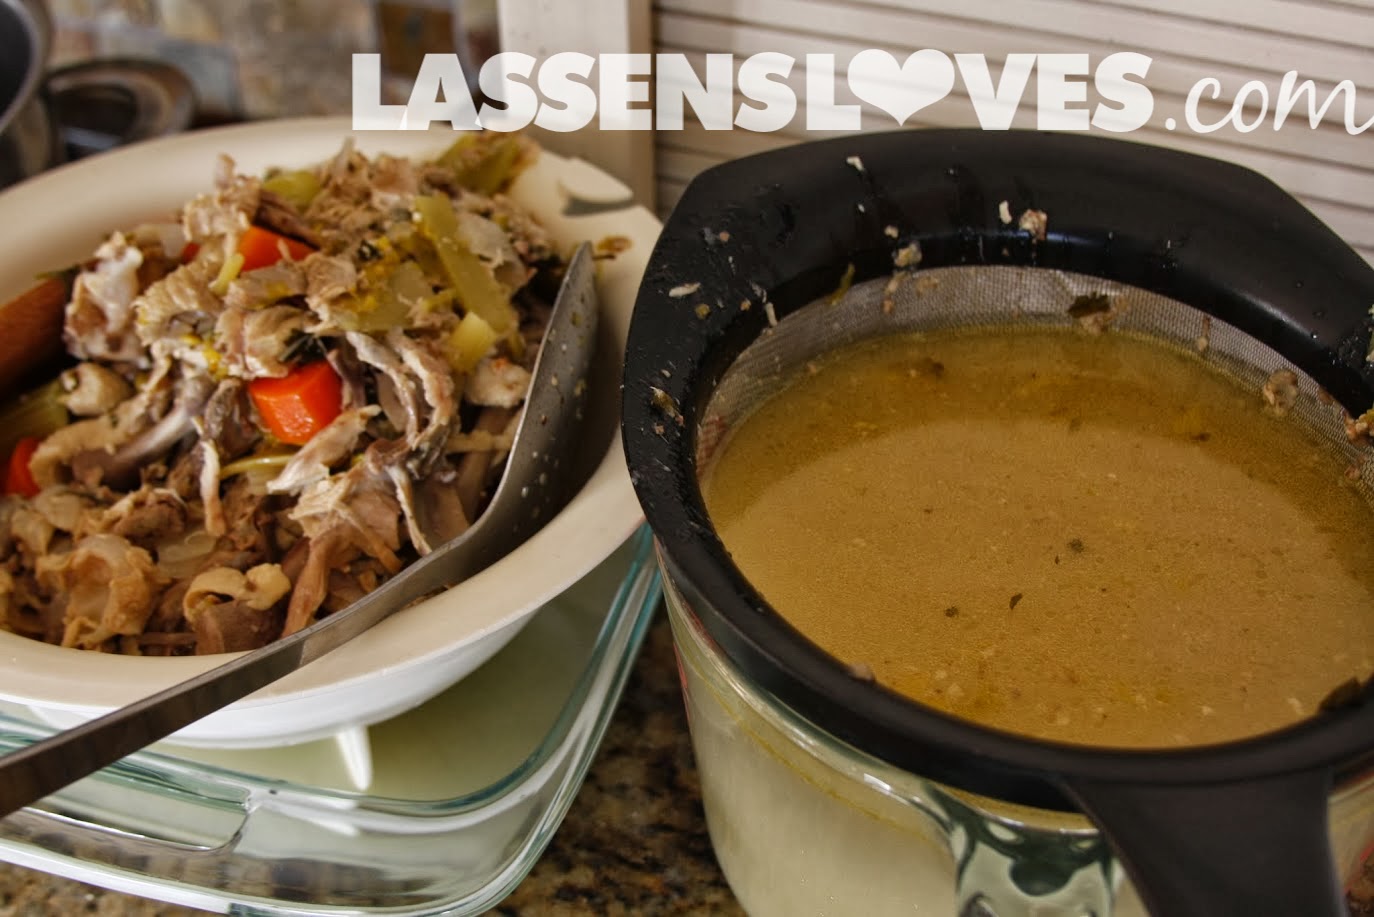  lassensloves.com, Lassen's, Chicken+broth+ingredients, Chicken+soup